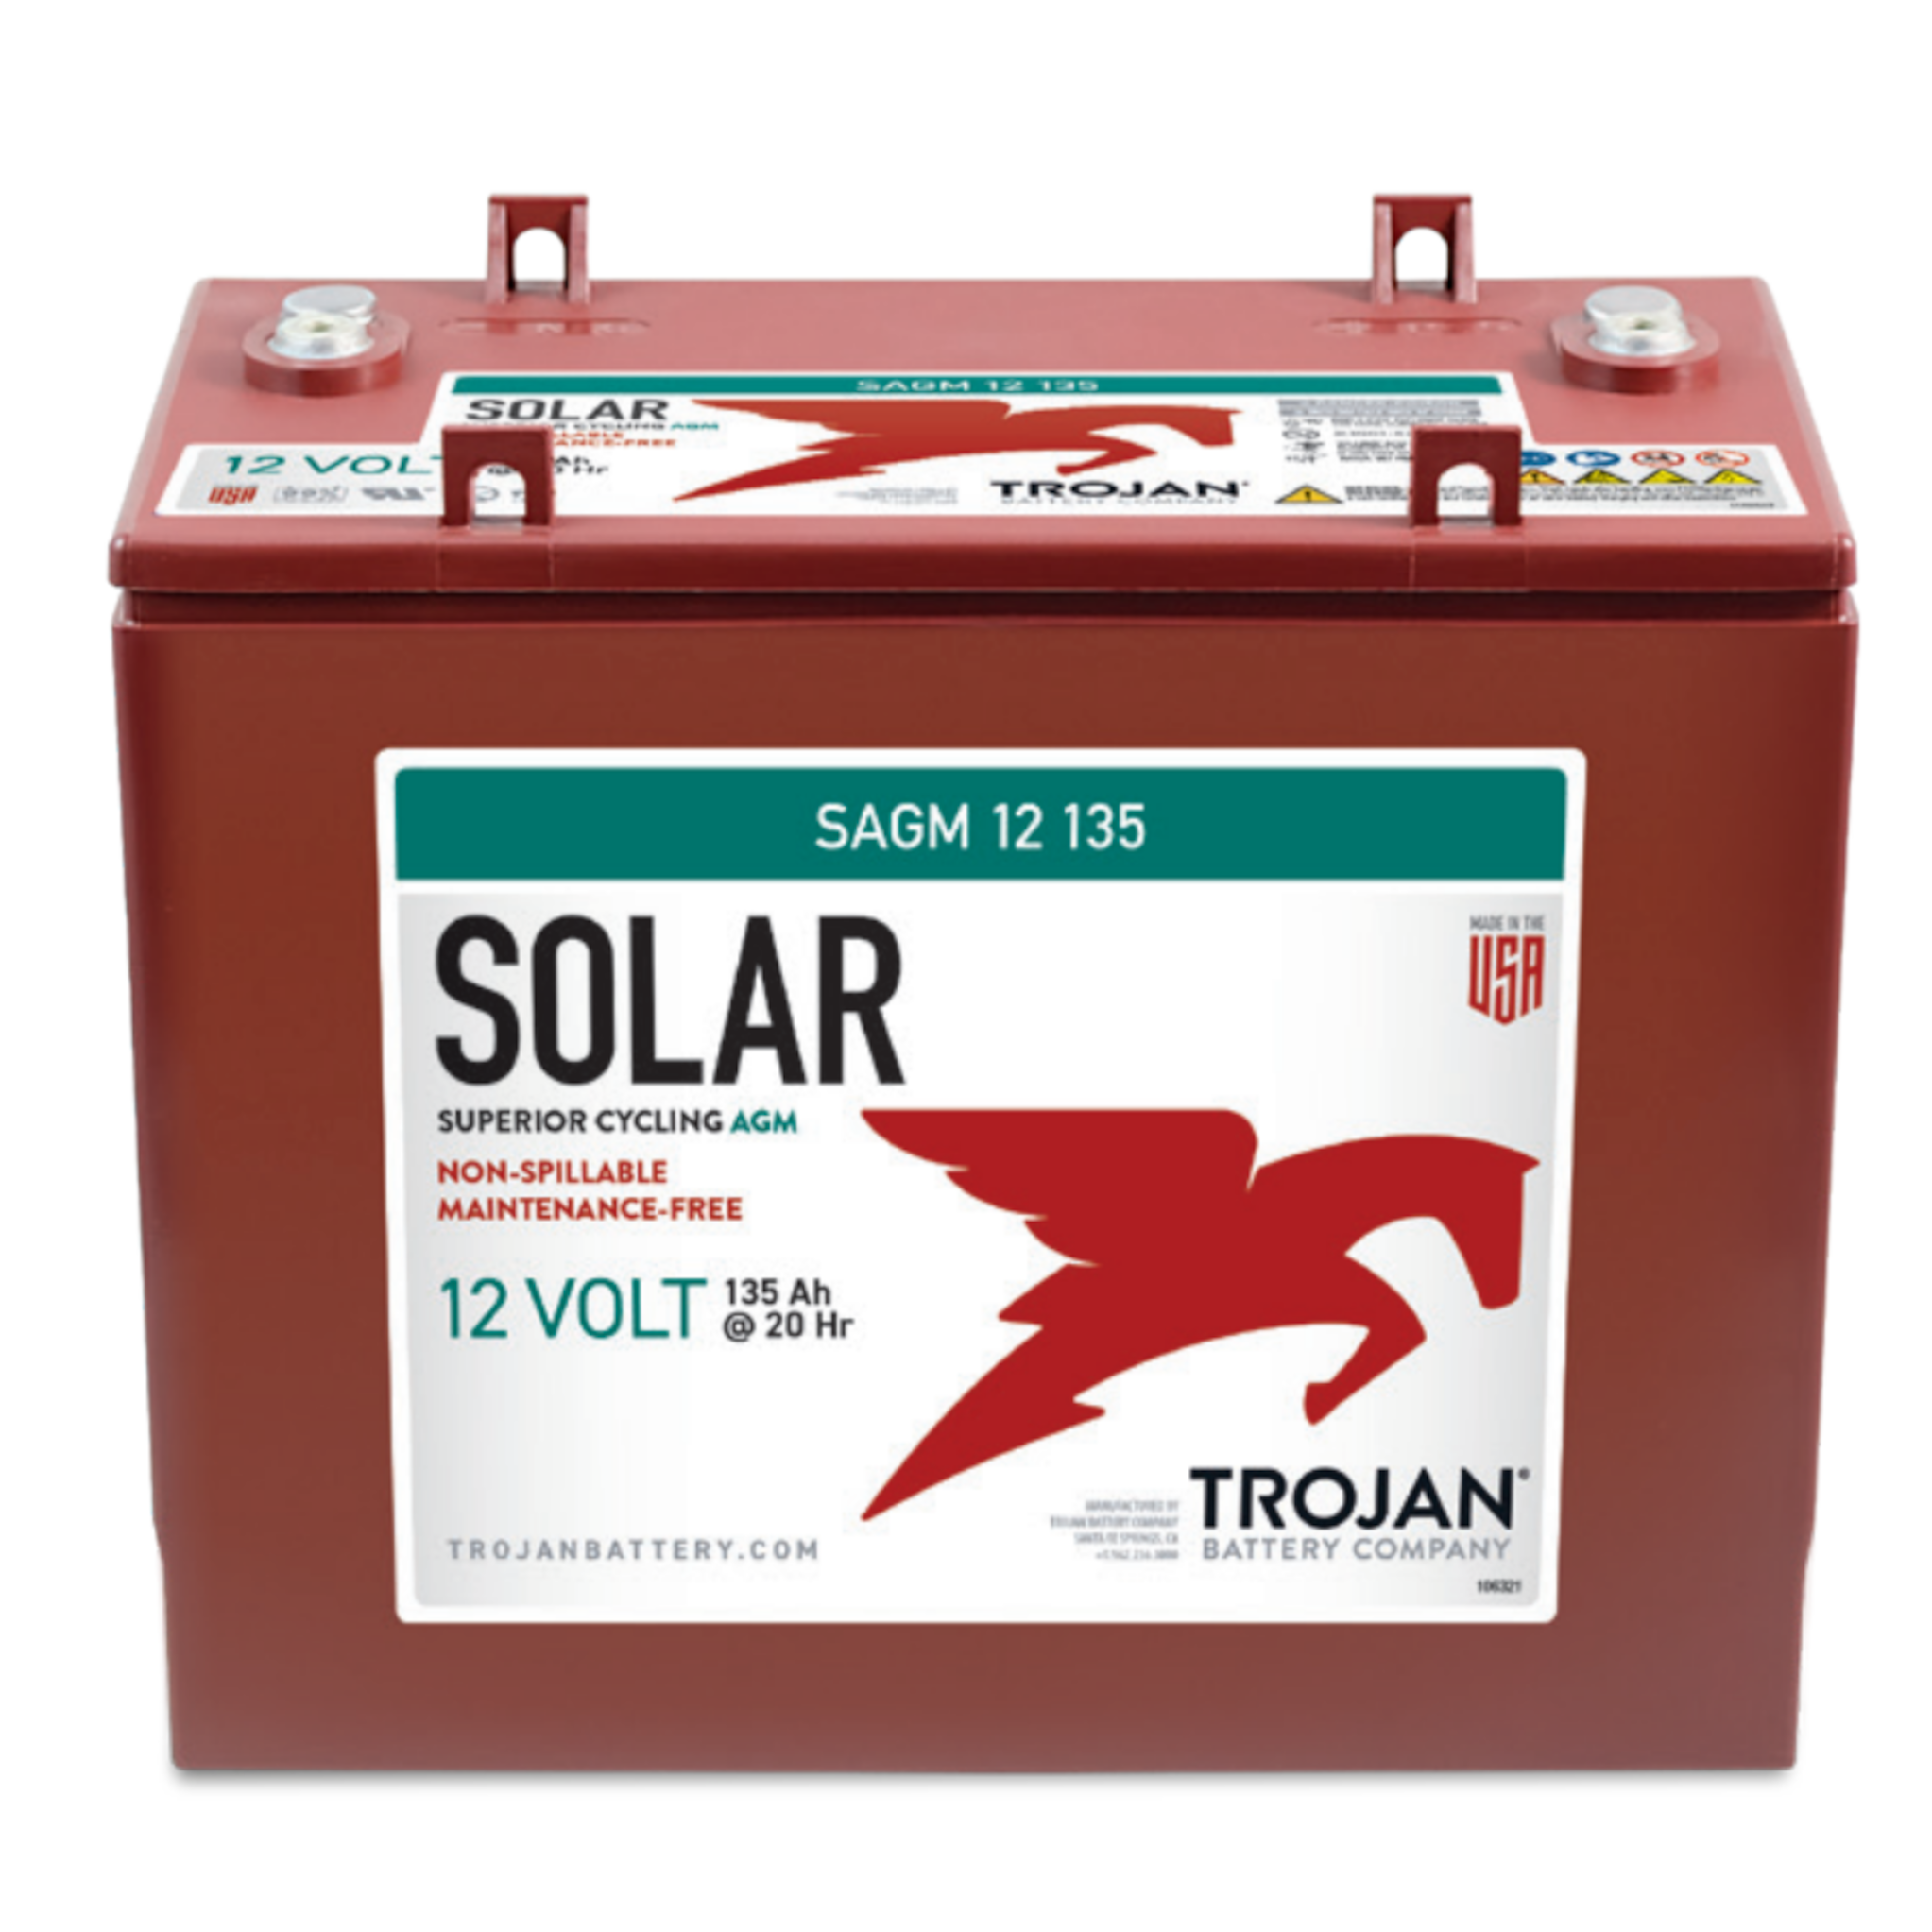 Trojan SAGM 12 135 12V Deep Cycle AGM Solar Battery